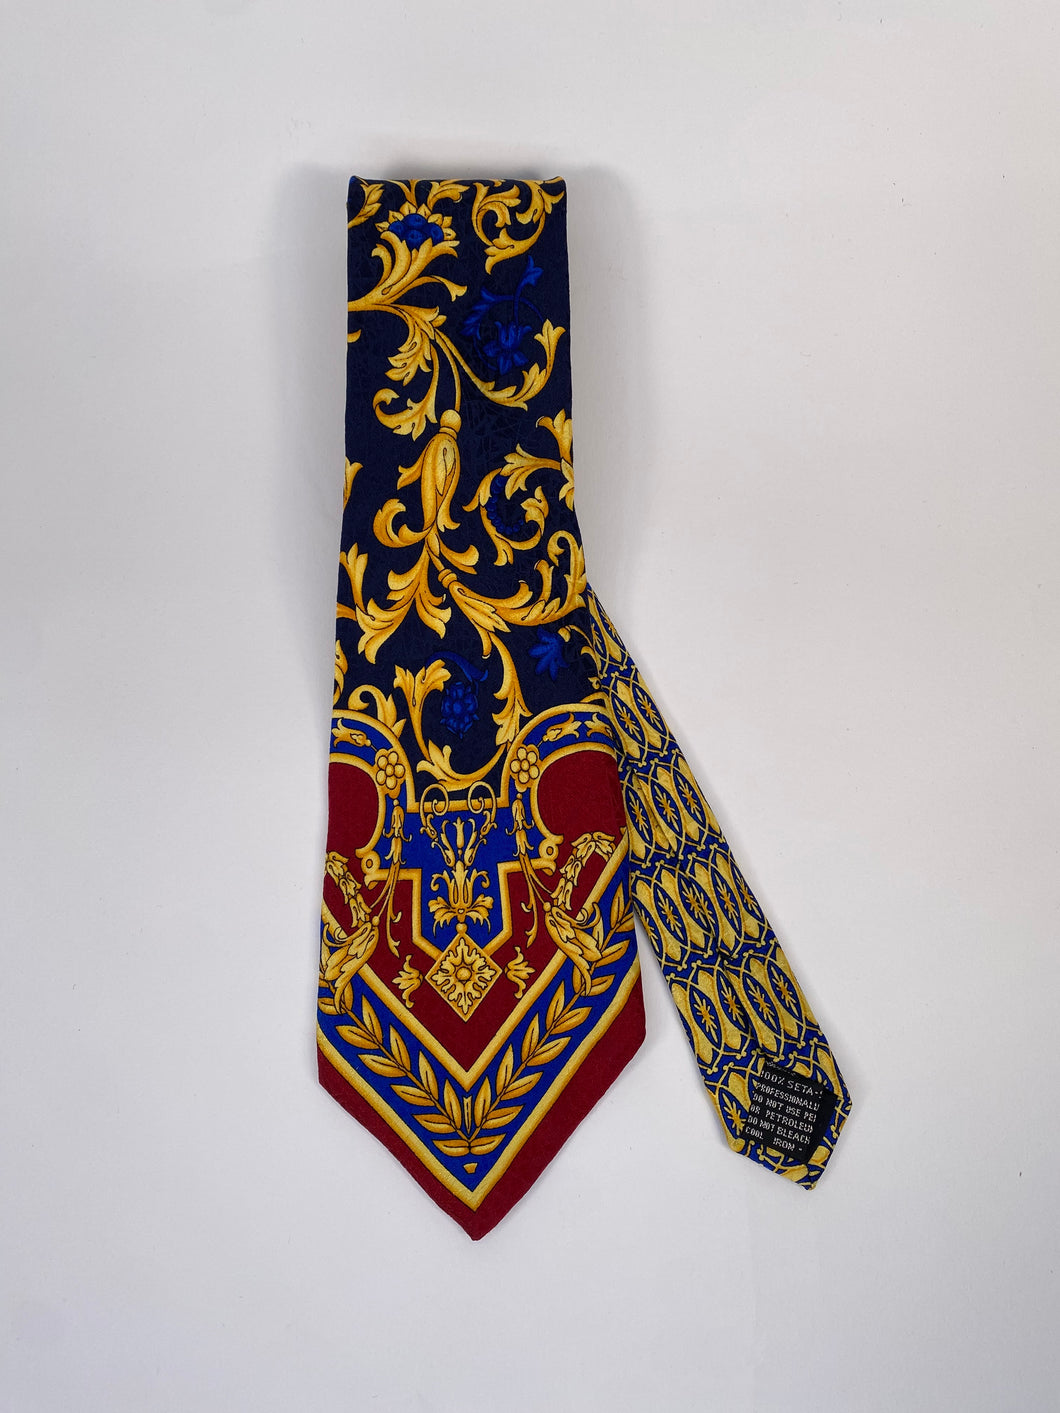 1990s Gianni Versace necktie blue / yellow / red